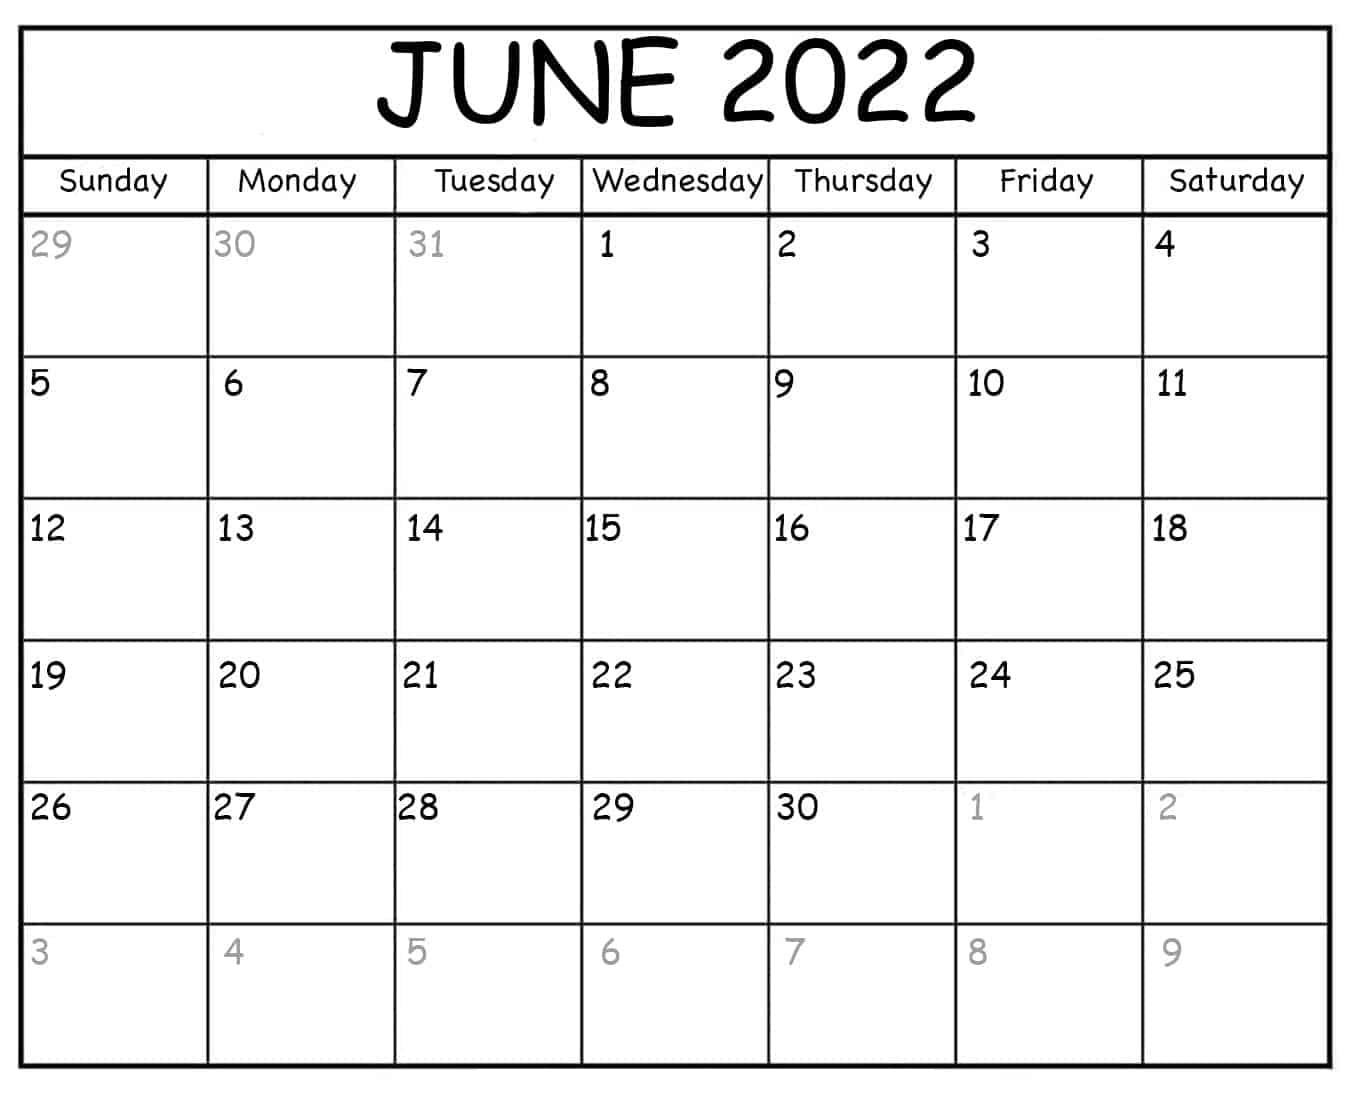 June 2022 Calendar Download